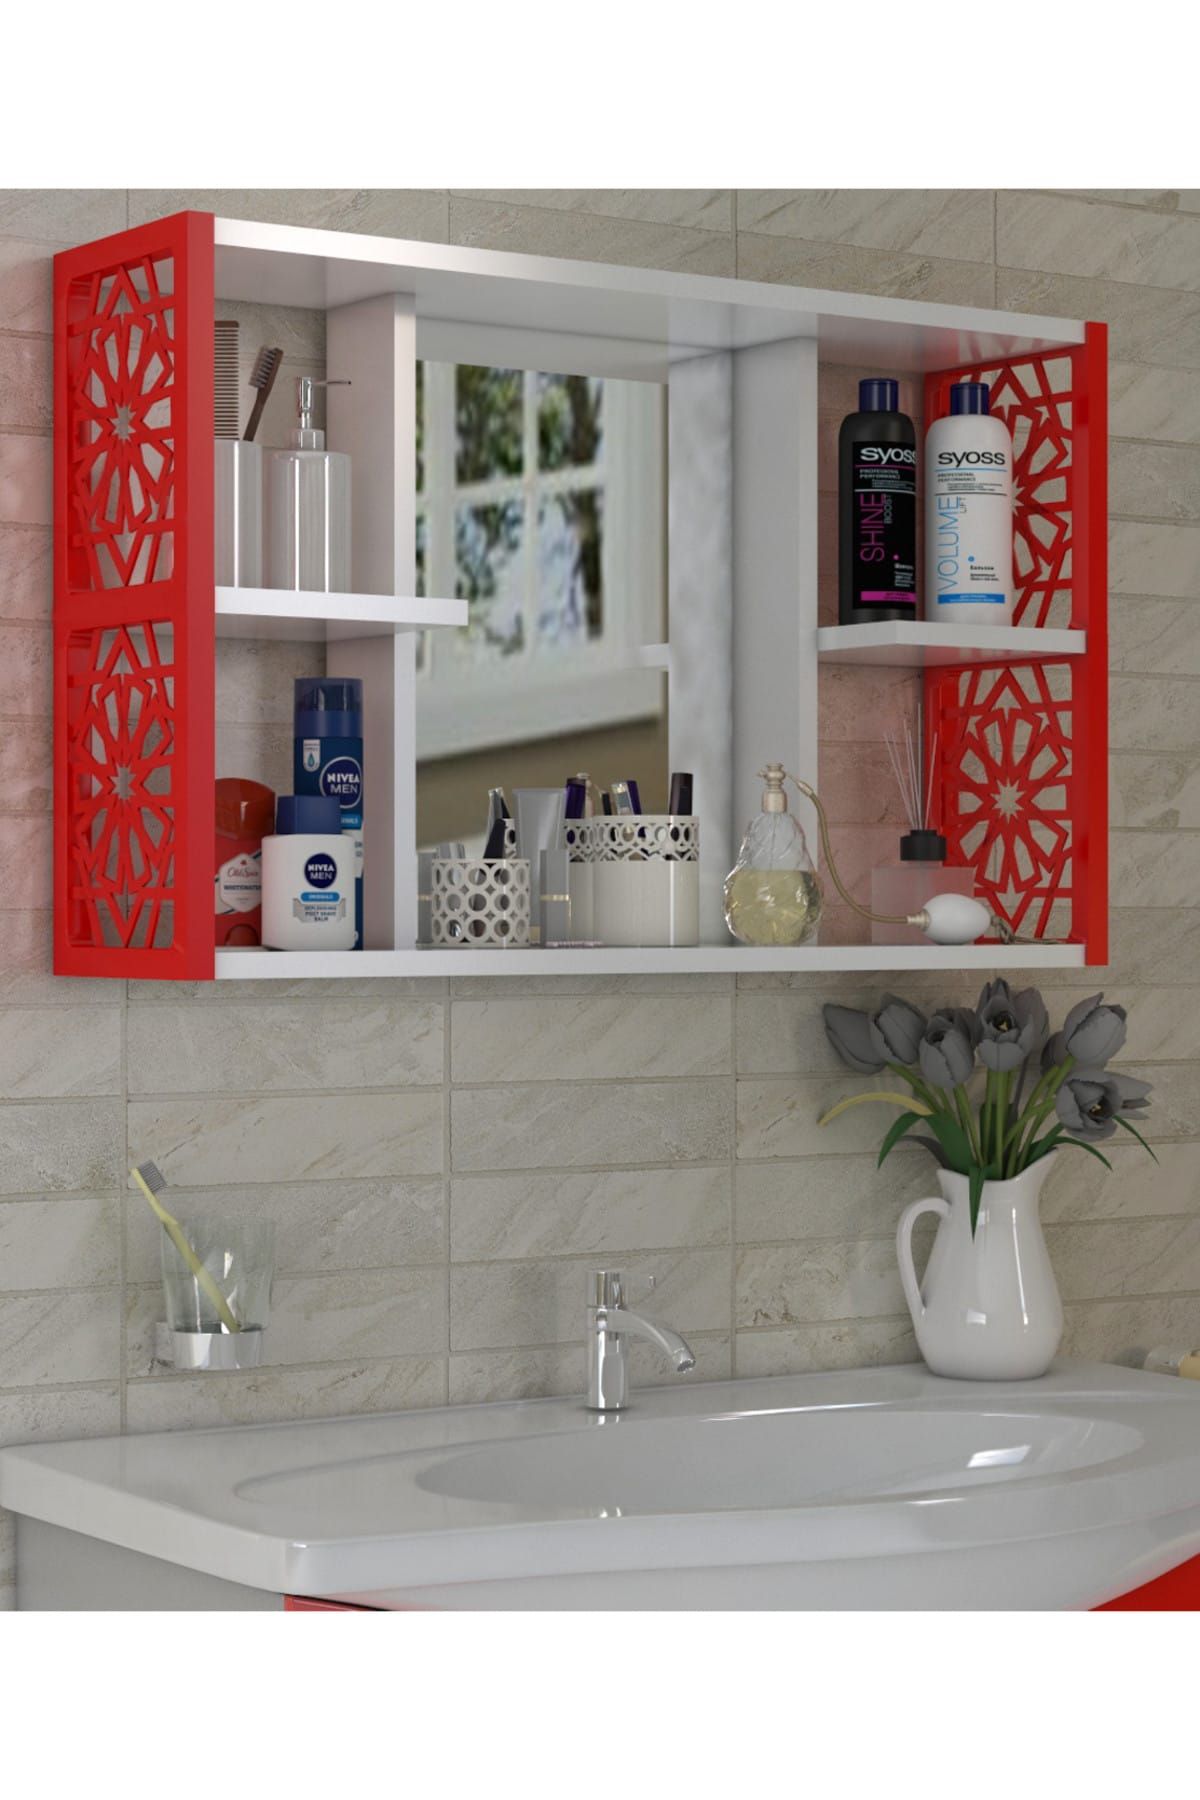 Remaks Aynalı Banyo Dolabı kırmızı